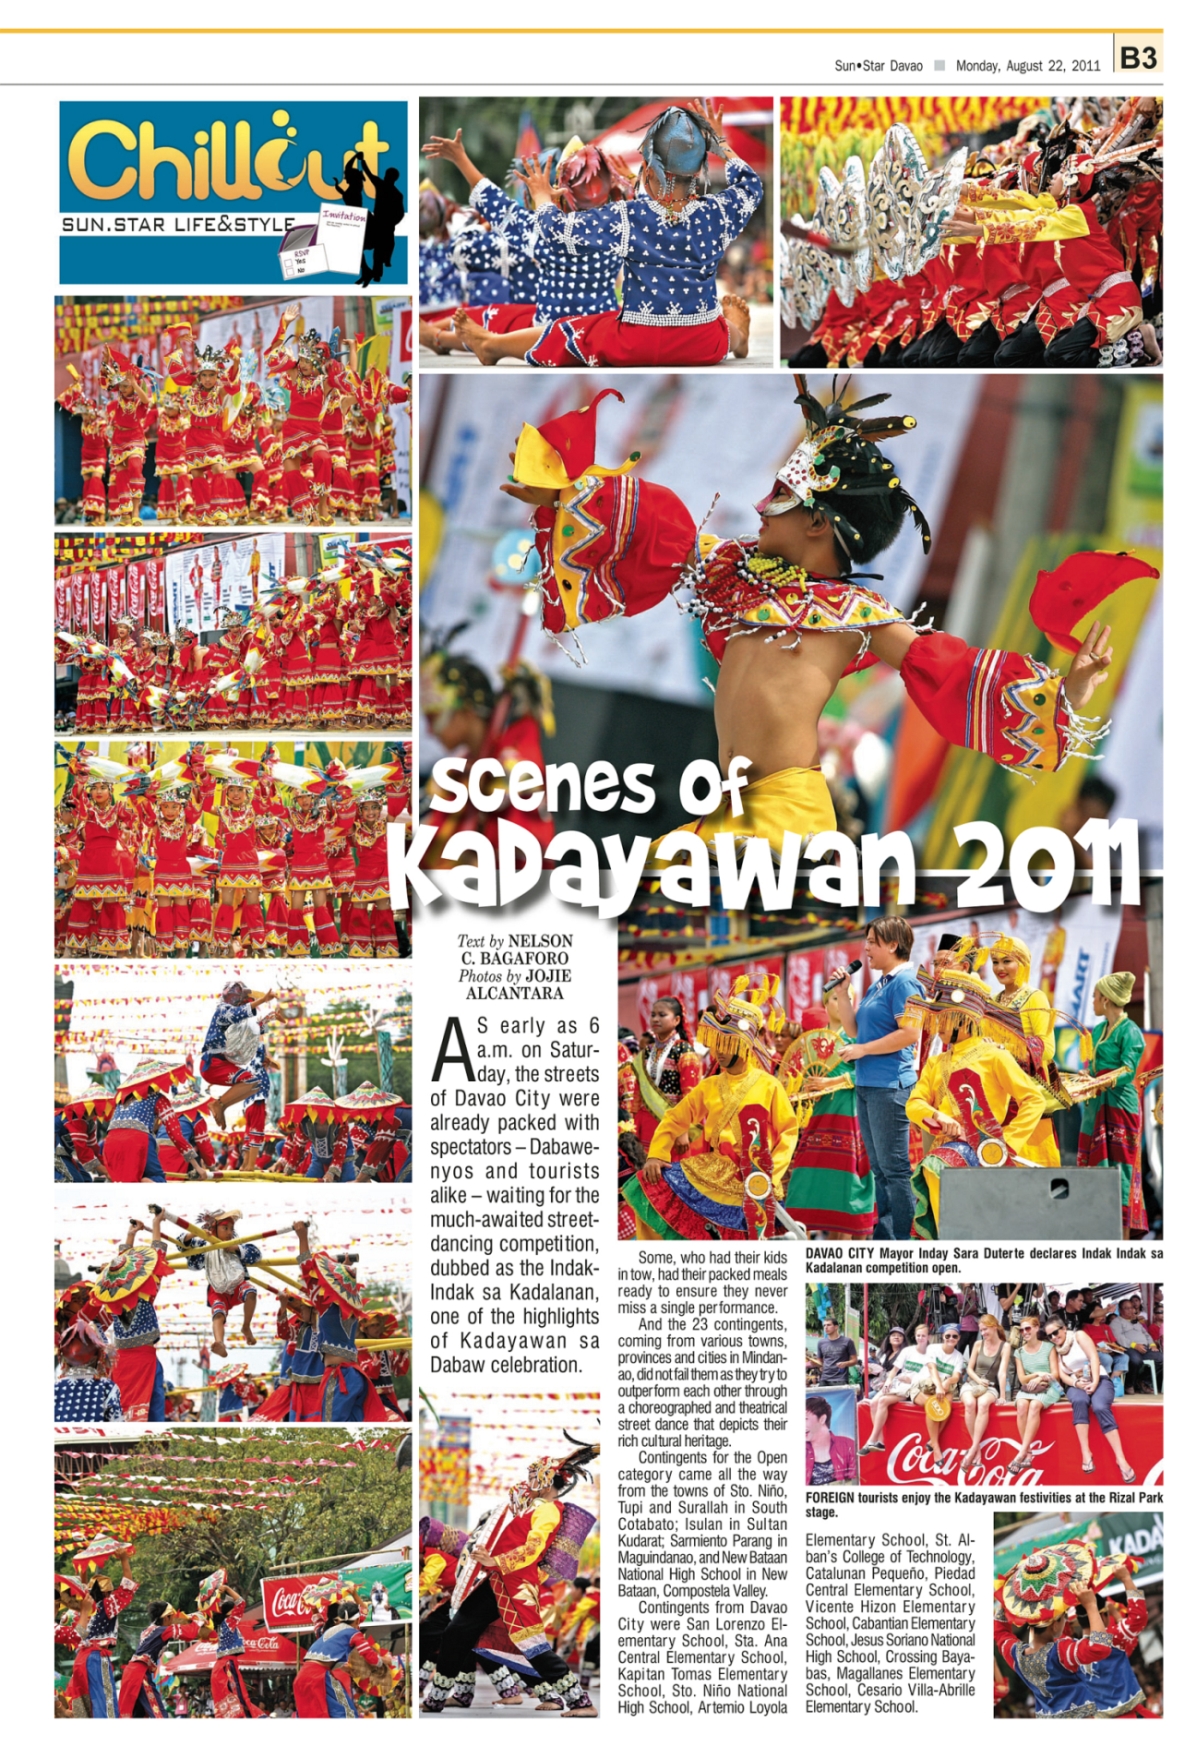 Scenes of Kadayawan 2011